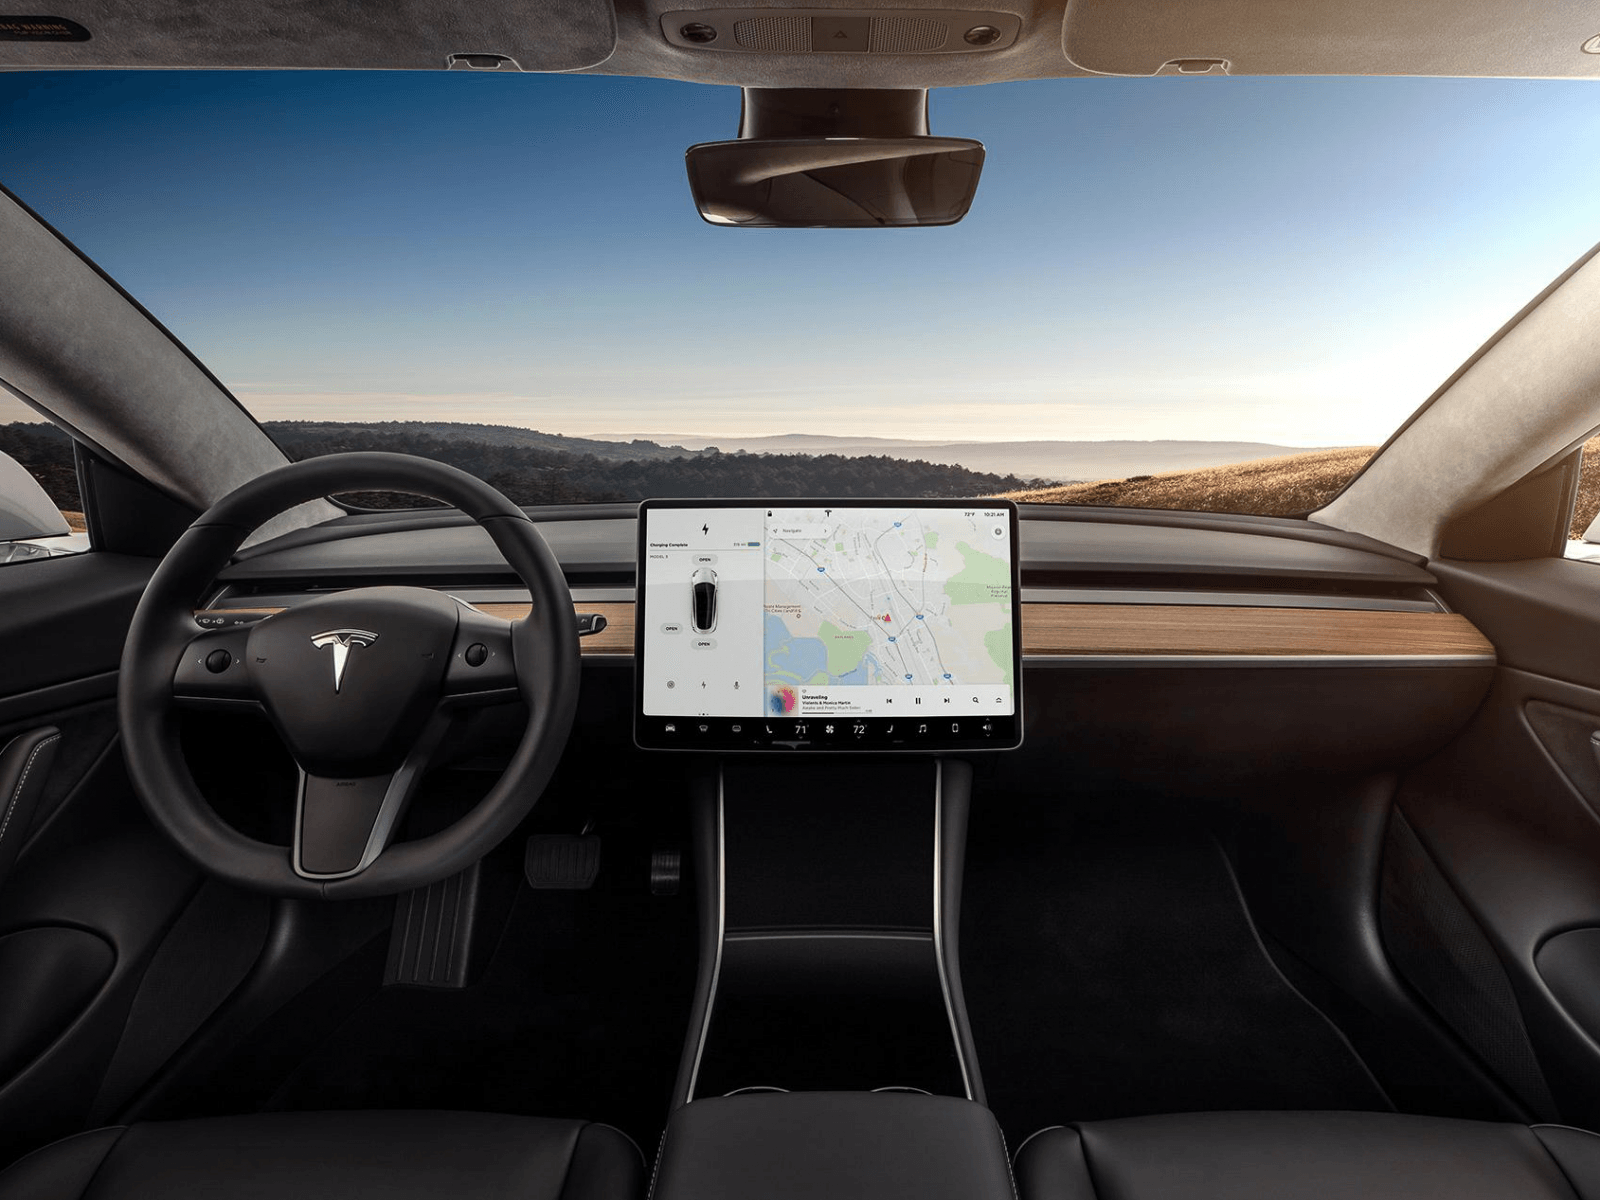 Tesla Model 3 wallpaper, free download